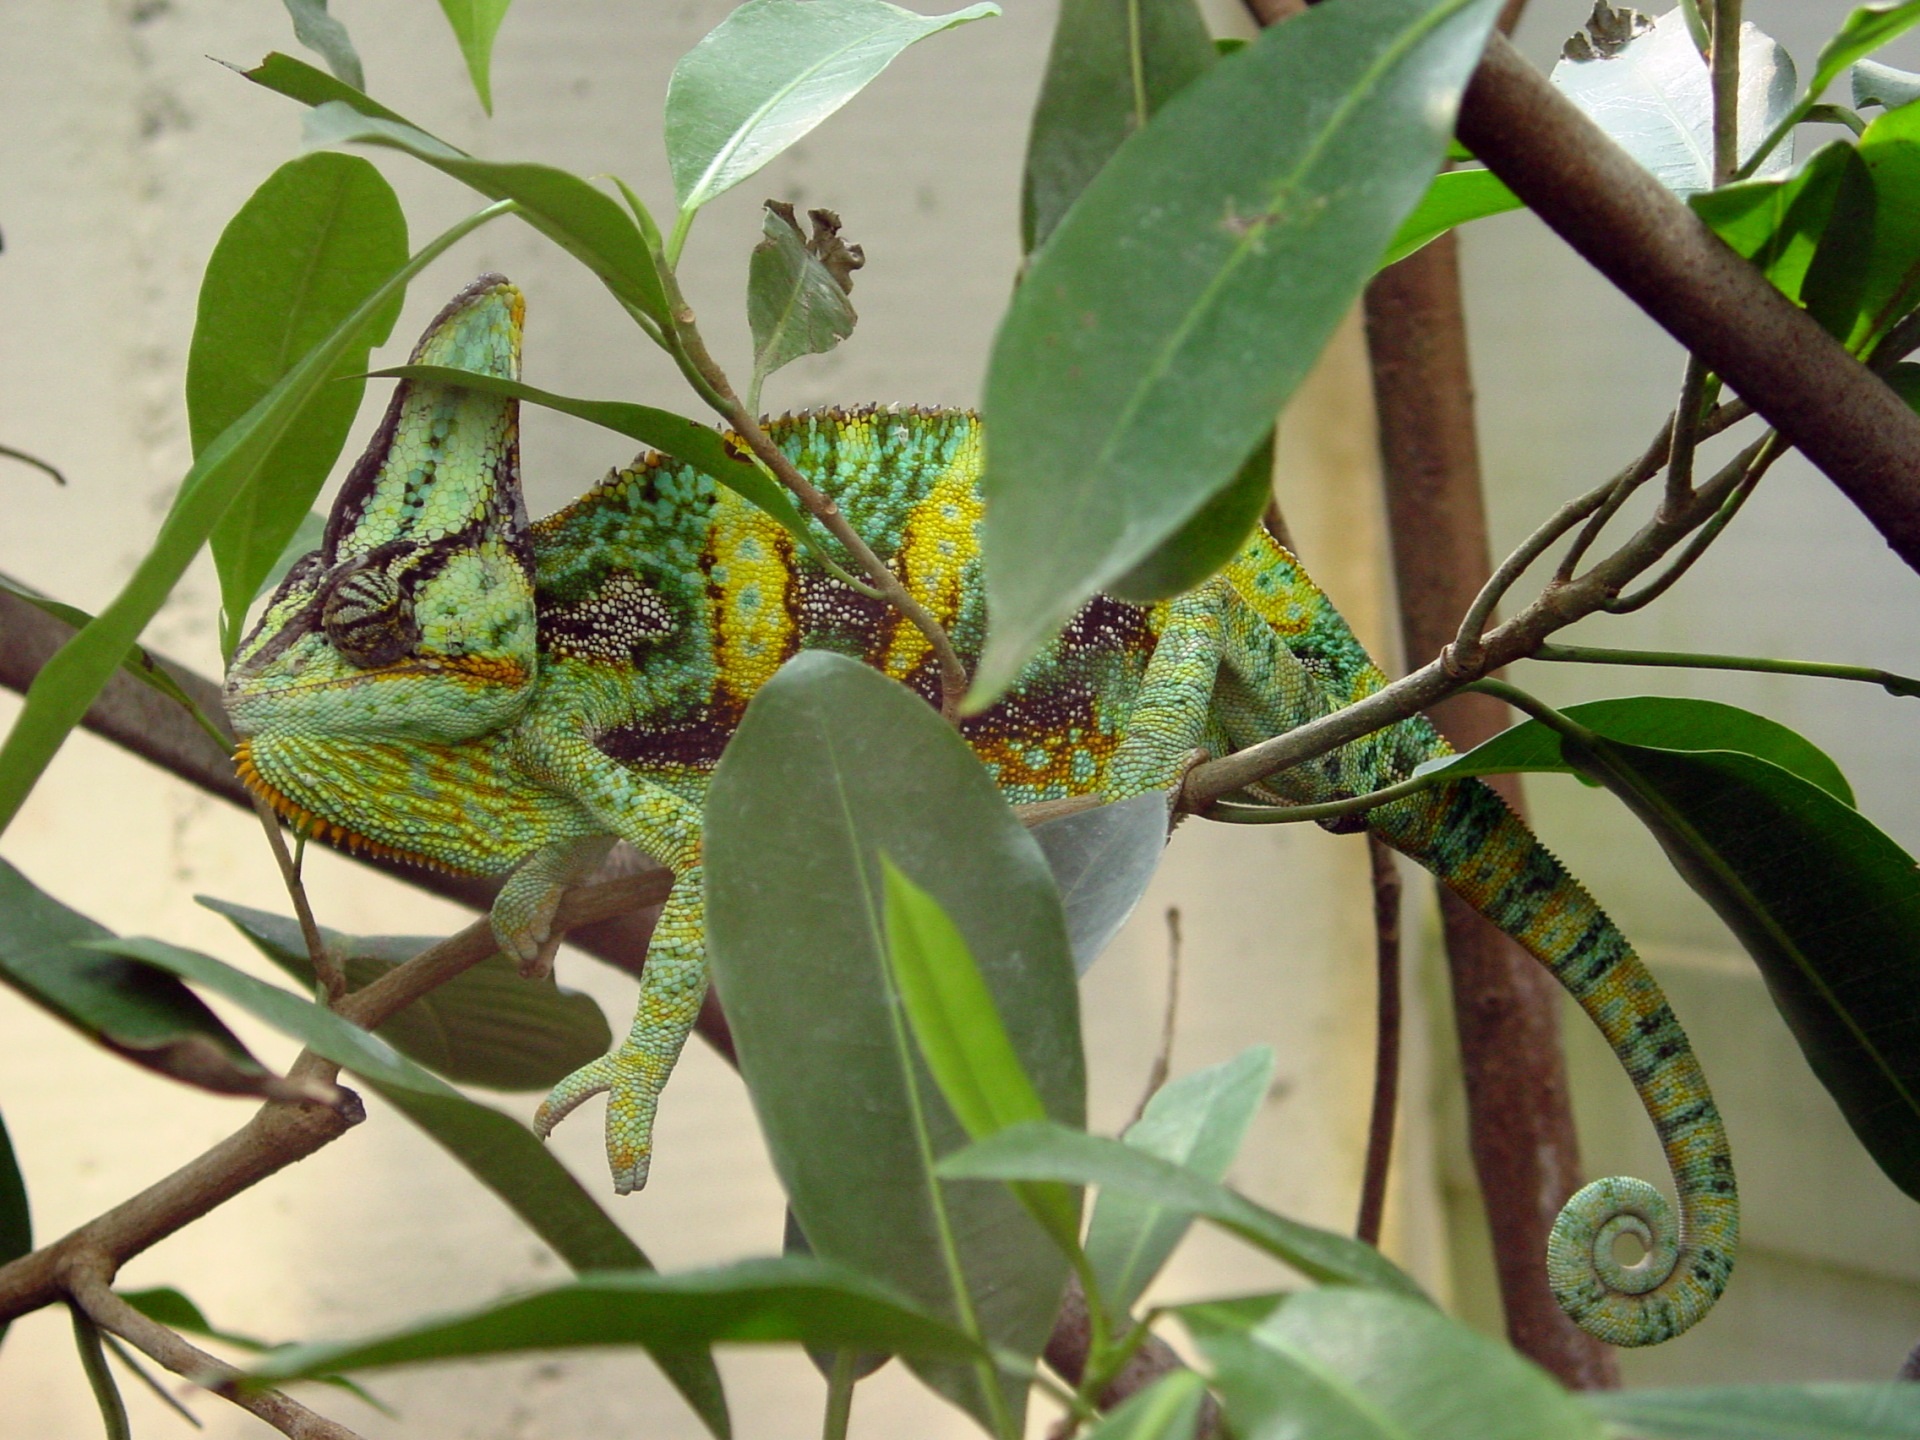 Chameleon on the tree photo